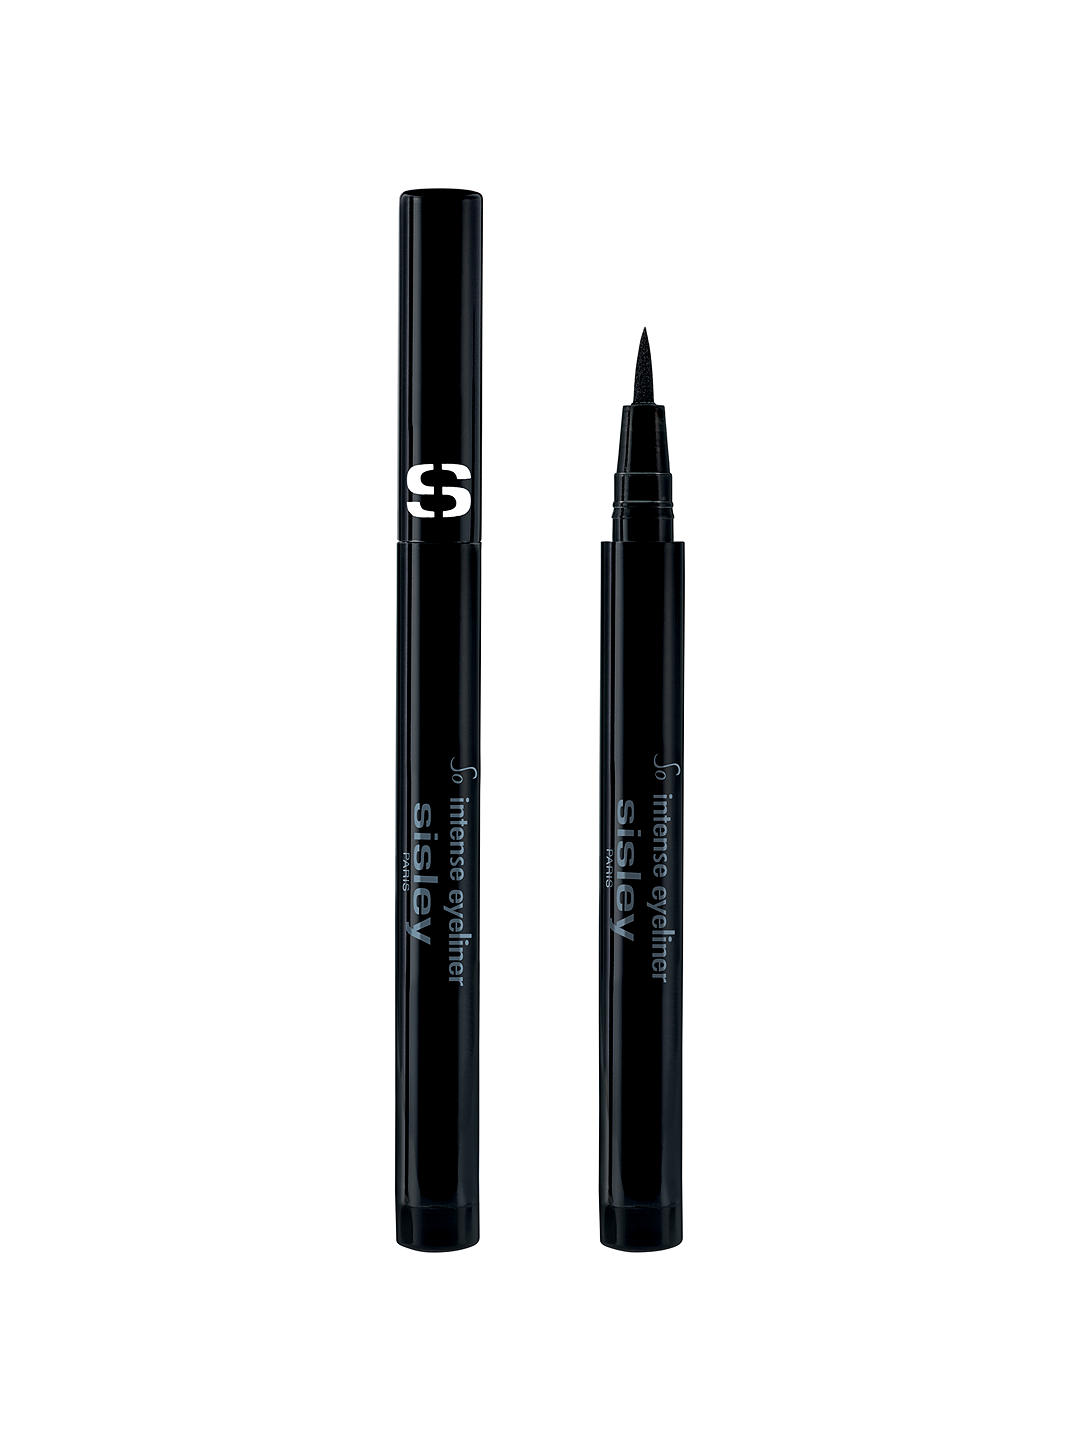 Sisley-Paris So intense Eyeliner Pencil, 1ml 1